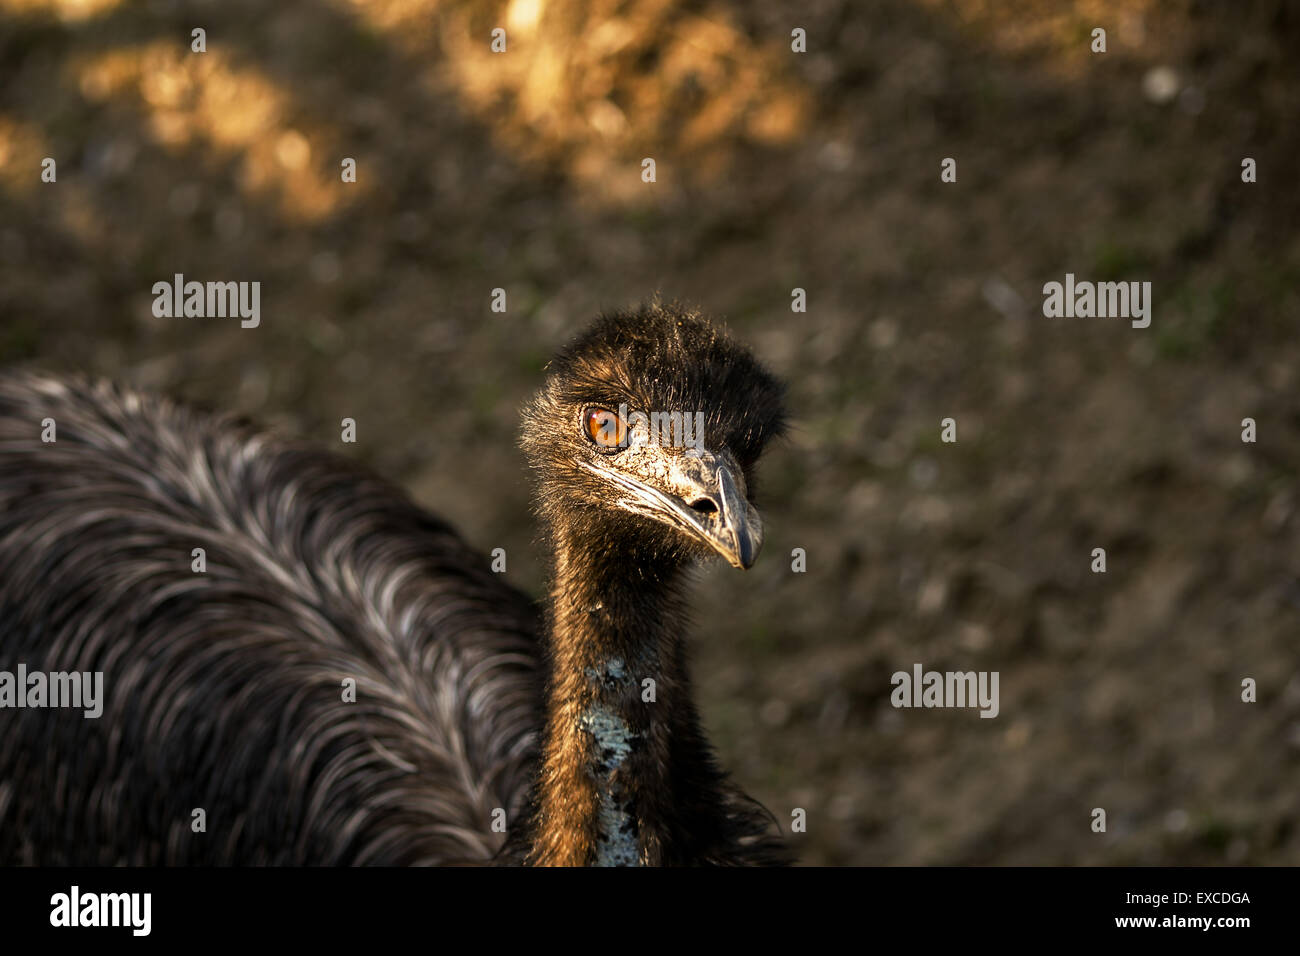 Black Emu (Dromaius novaehollandiae) curious staring on blurred background with golden light. Stock Photo